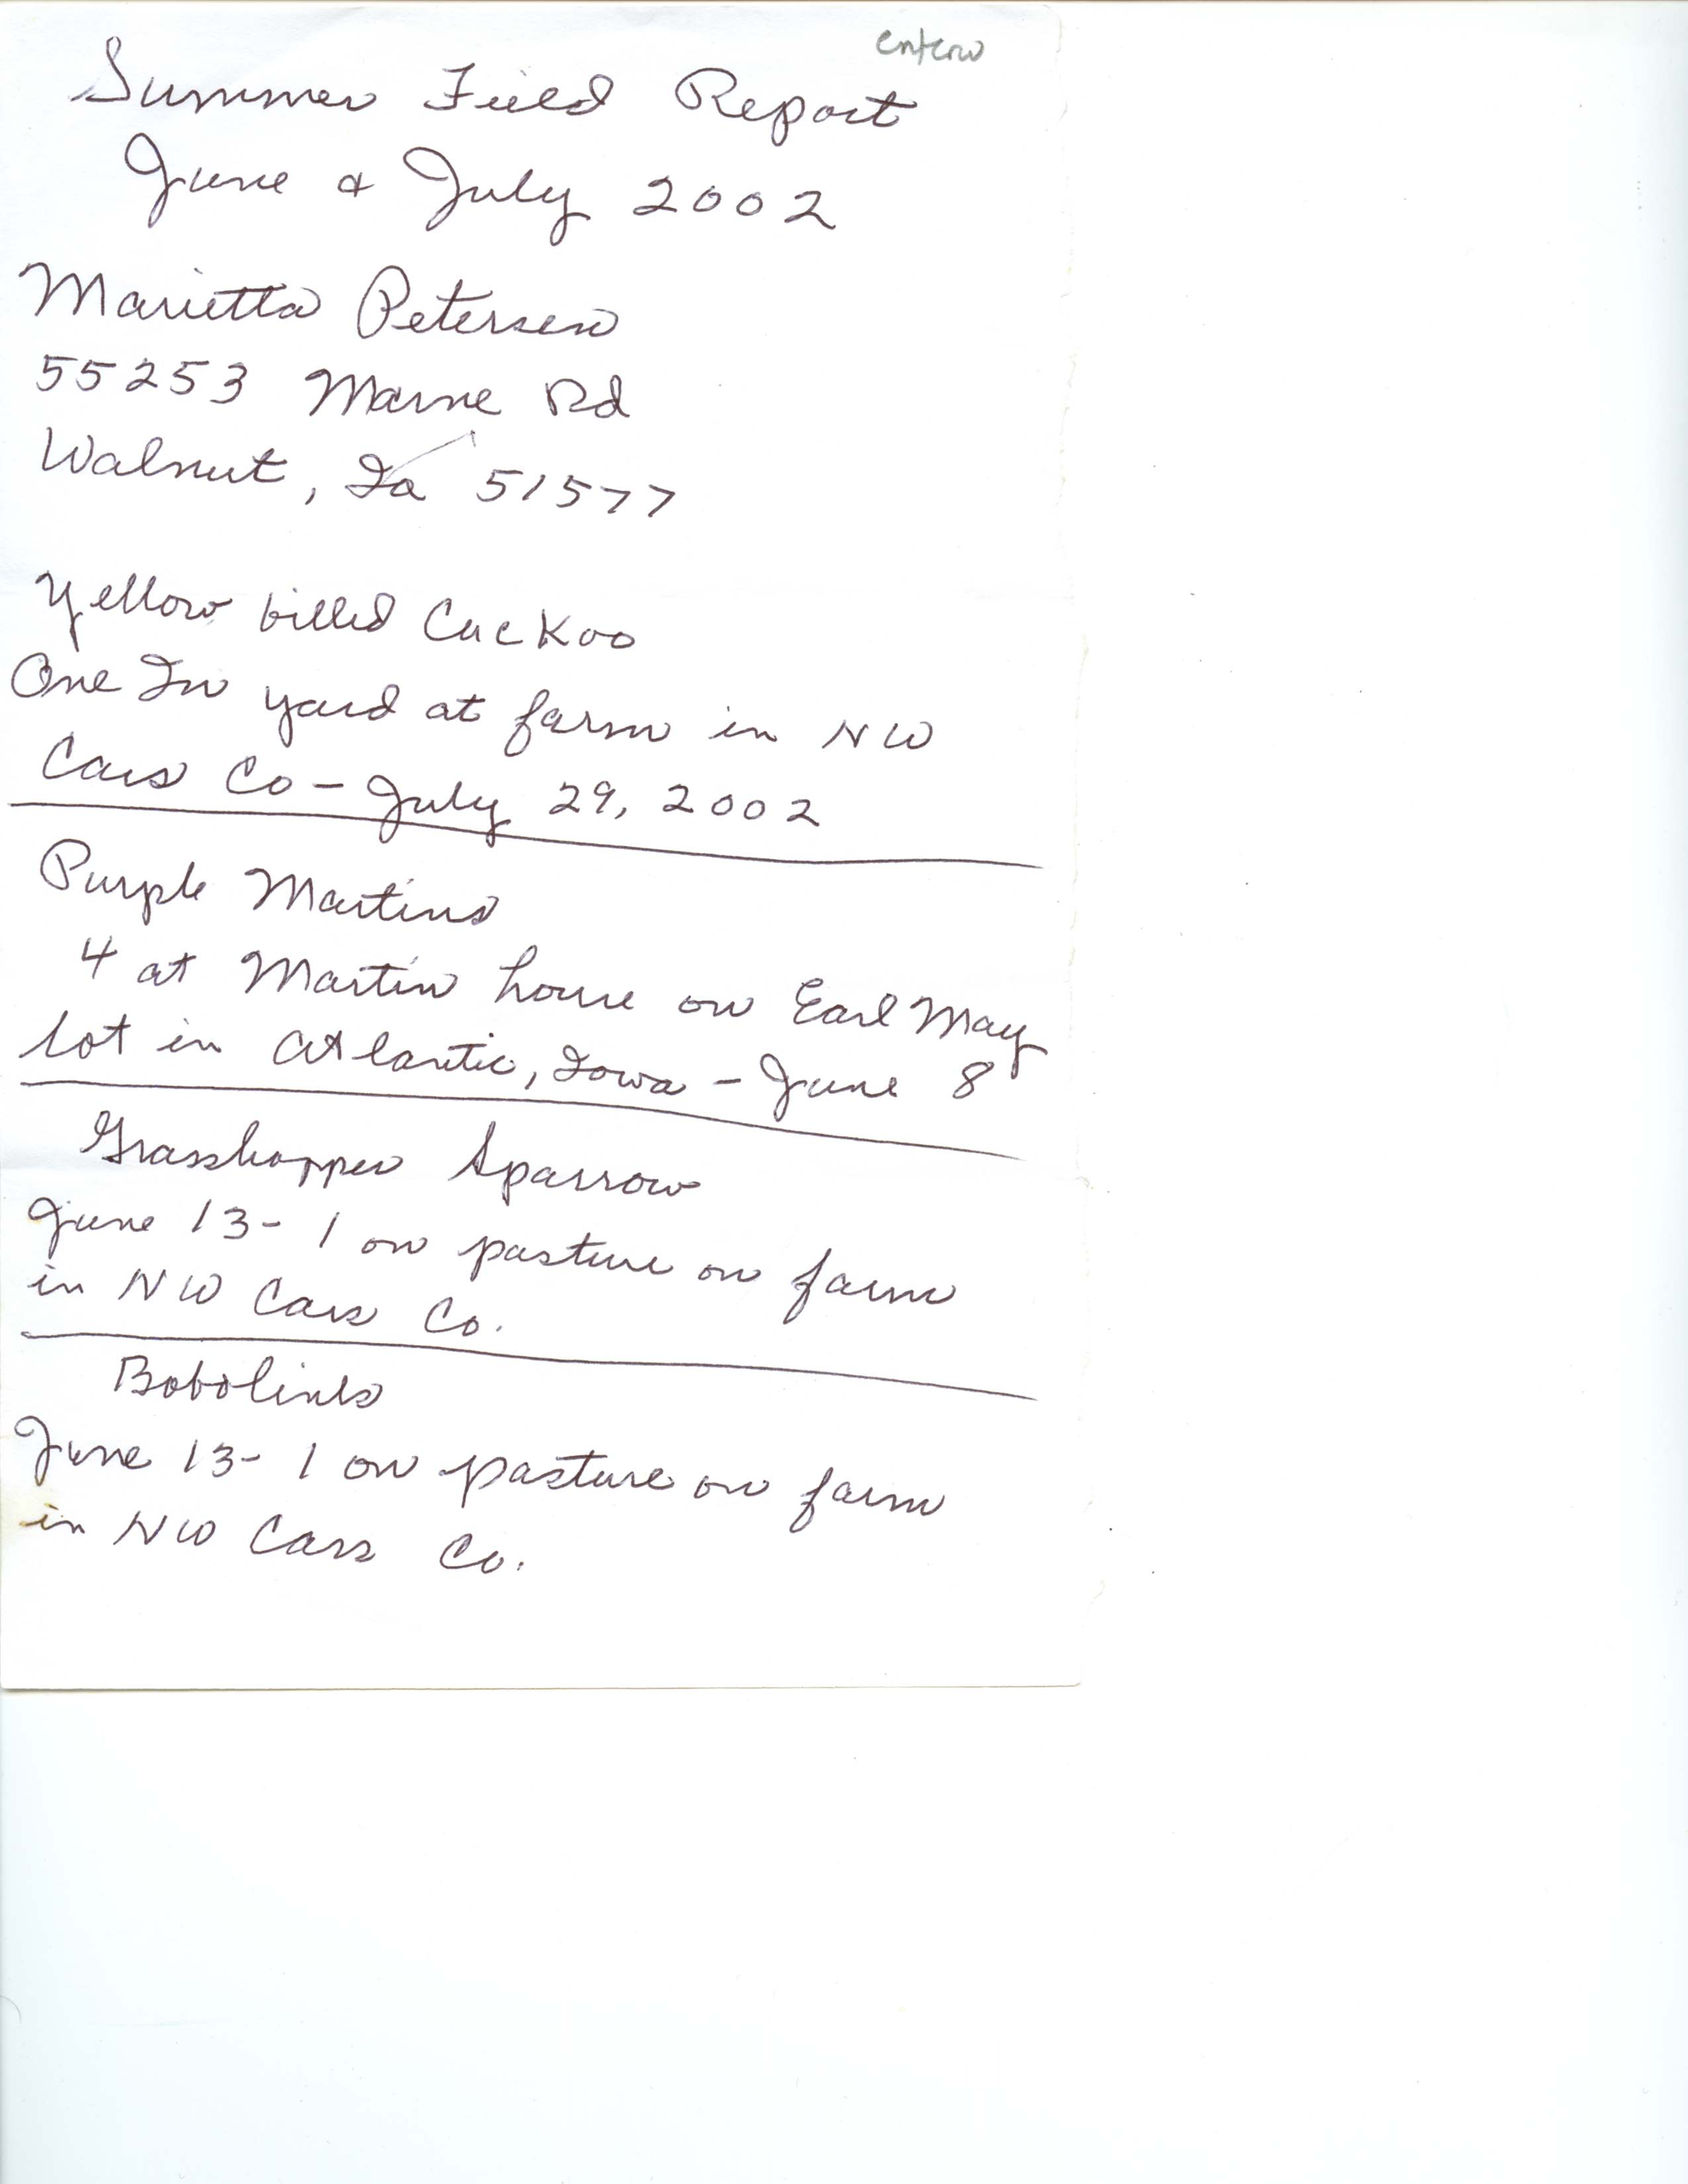 Field notes contributed by Marietta A. Petersen, summer 2002